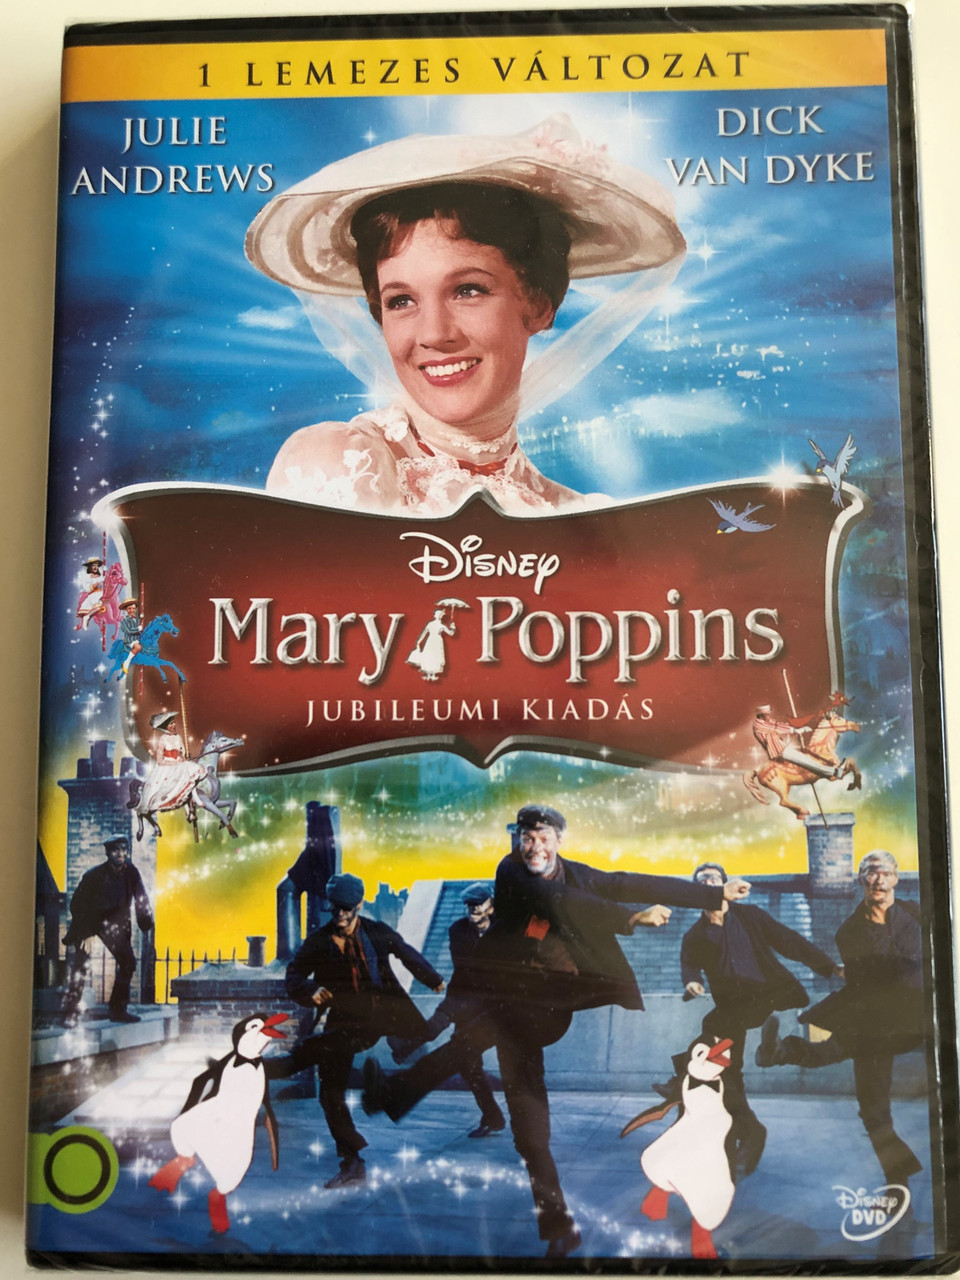 Mary Poppins DVD 1964 Jubileumi kiadás / Hungarian Anniversary edition /  Directed by Robert Stevenson / Starring: Julie Andrews, Dick Van Dyke,  David Tomlinson, Glynis Johns - Bible in My Language